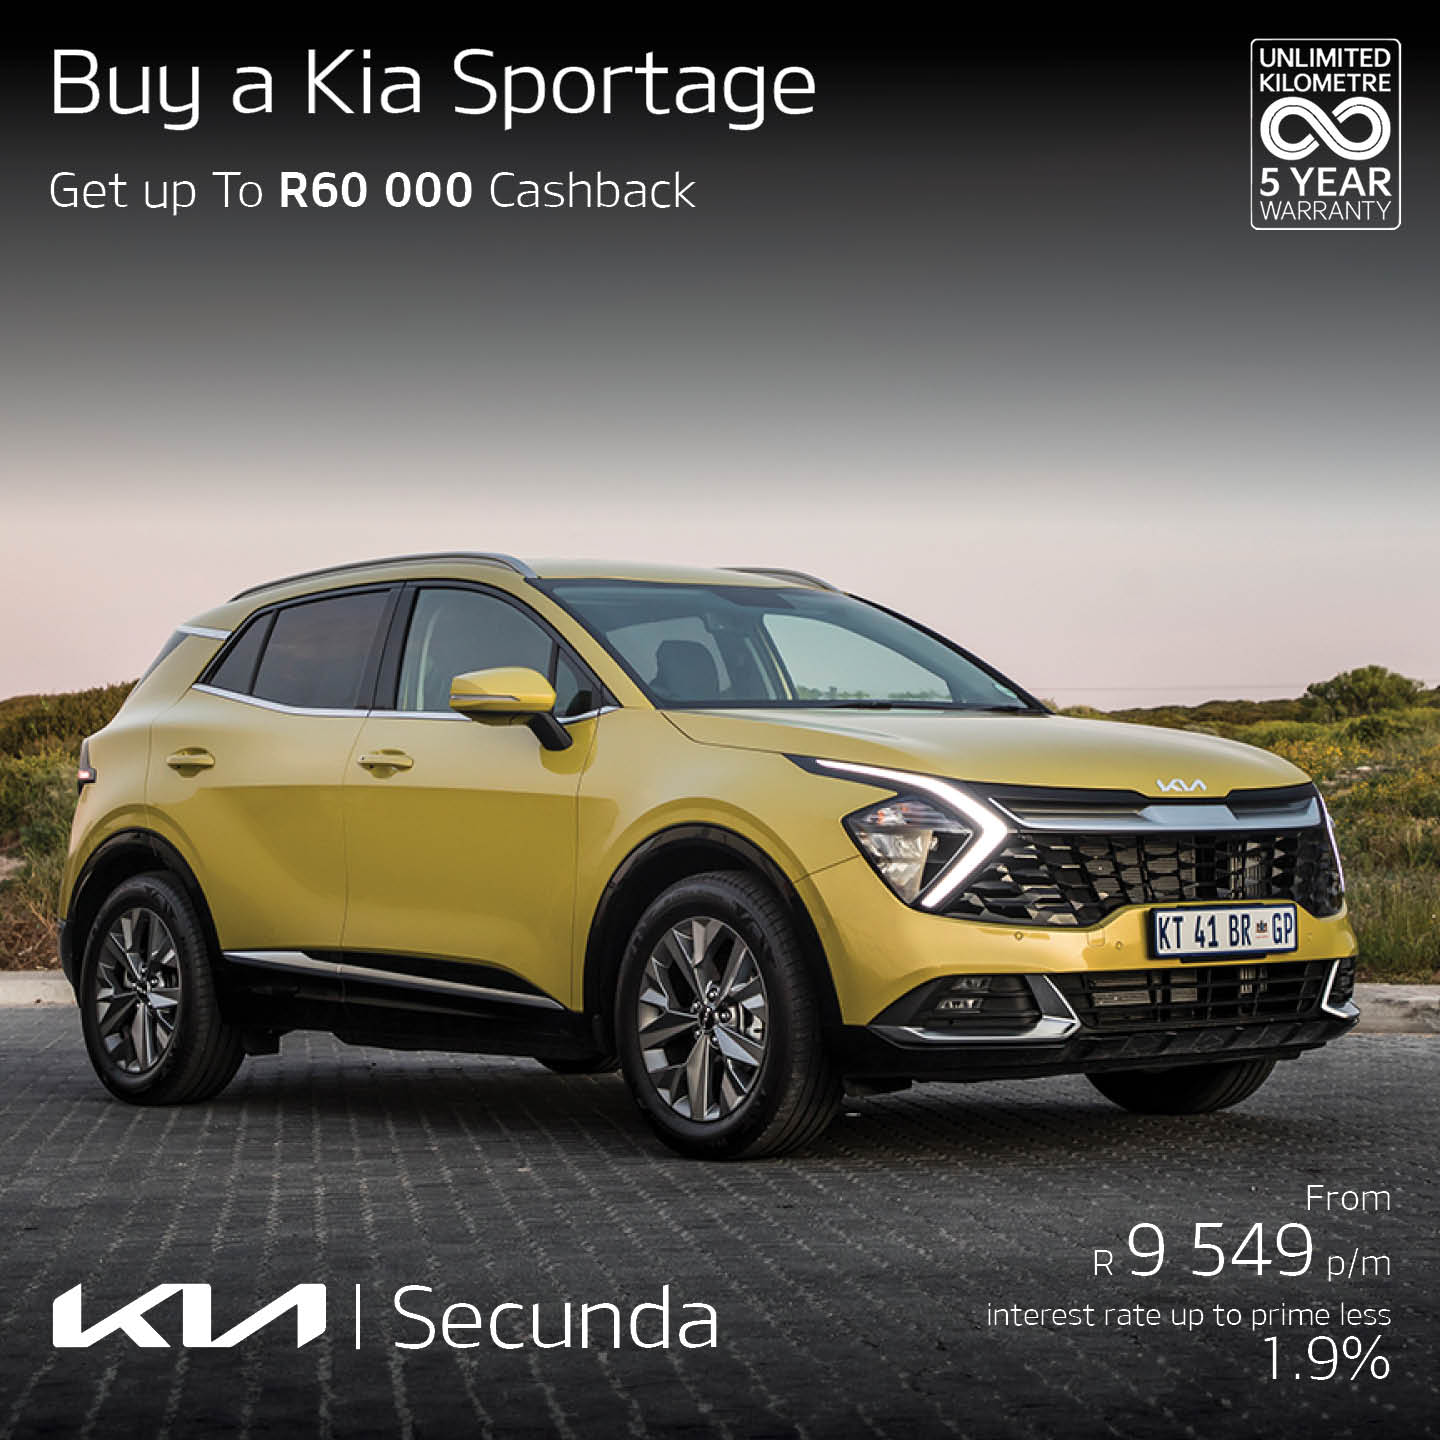 KIA Sportage image from 